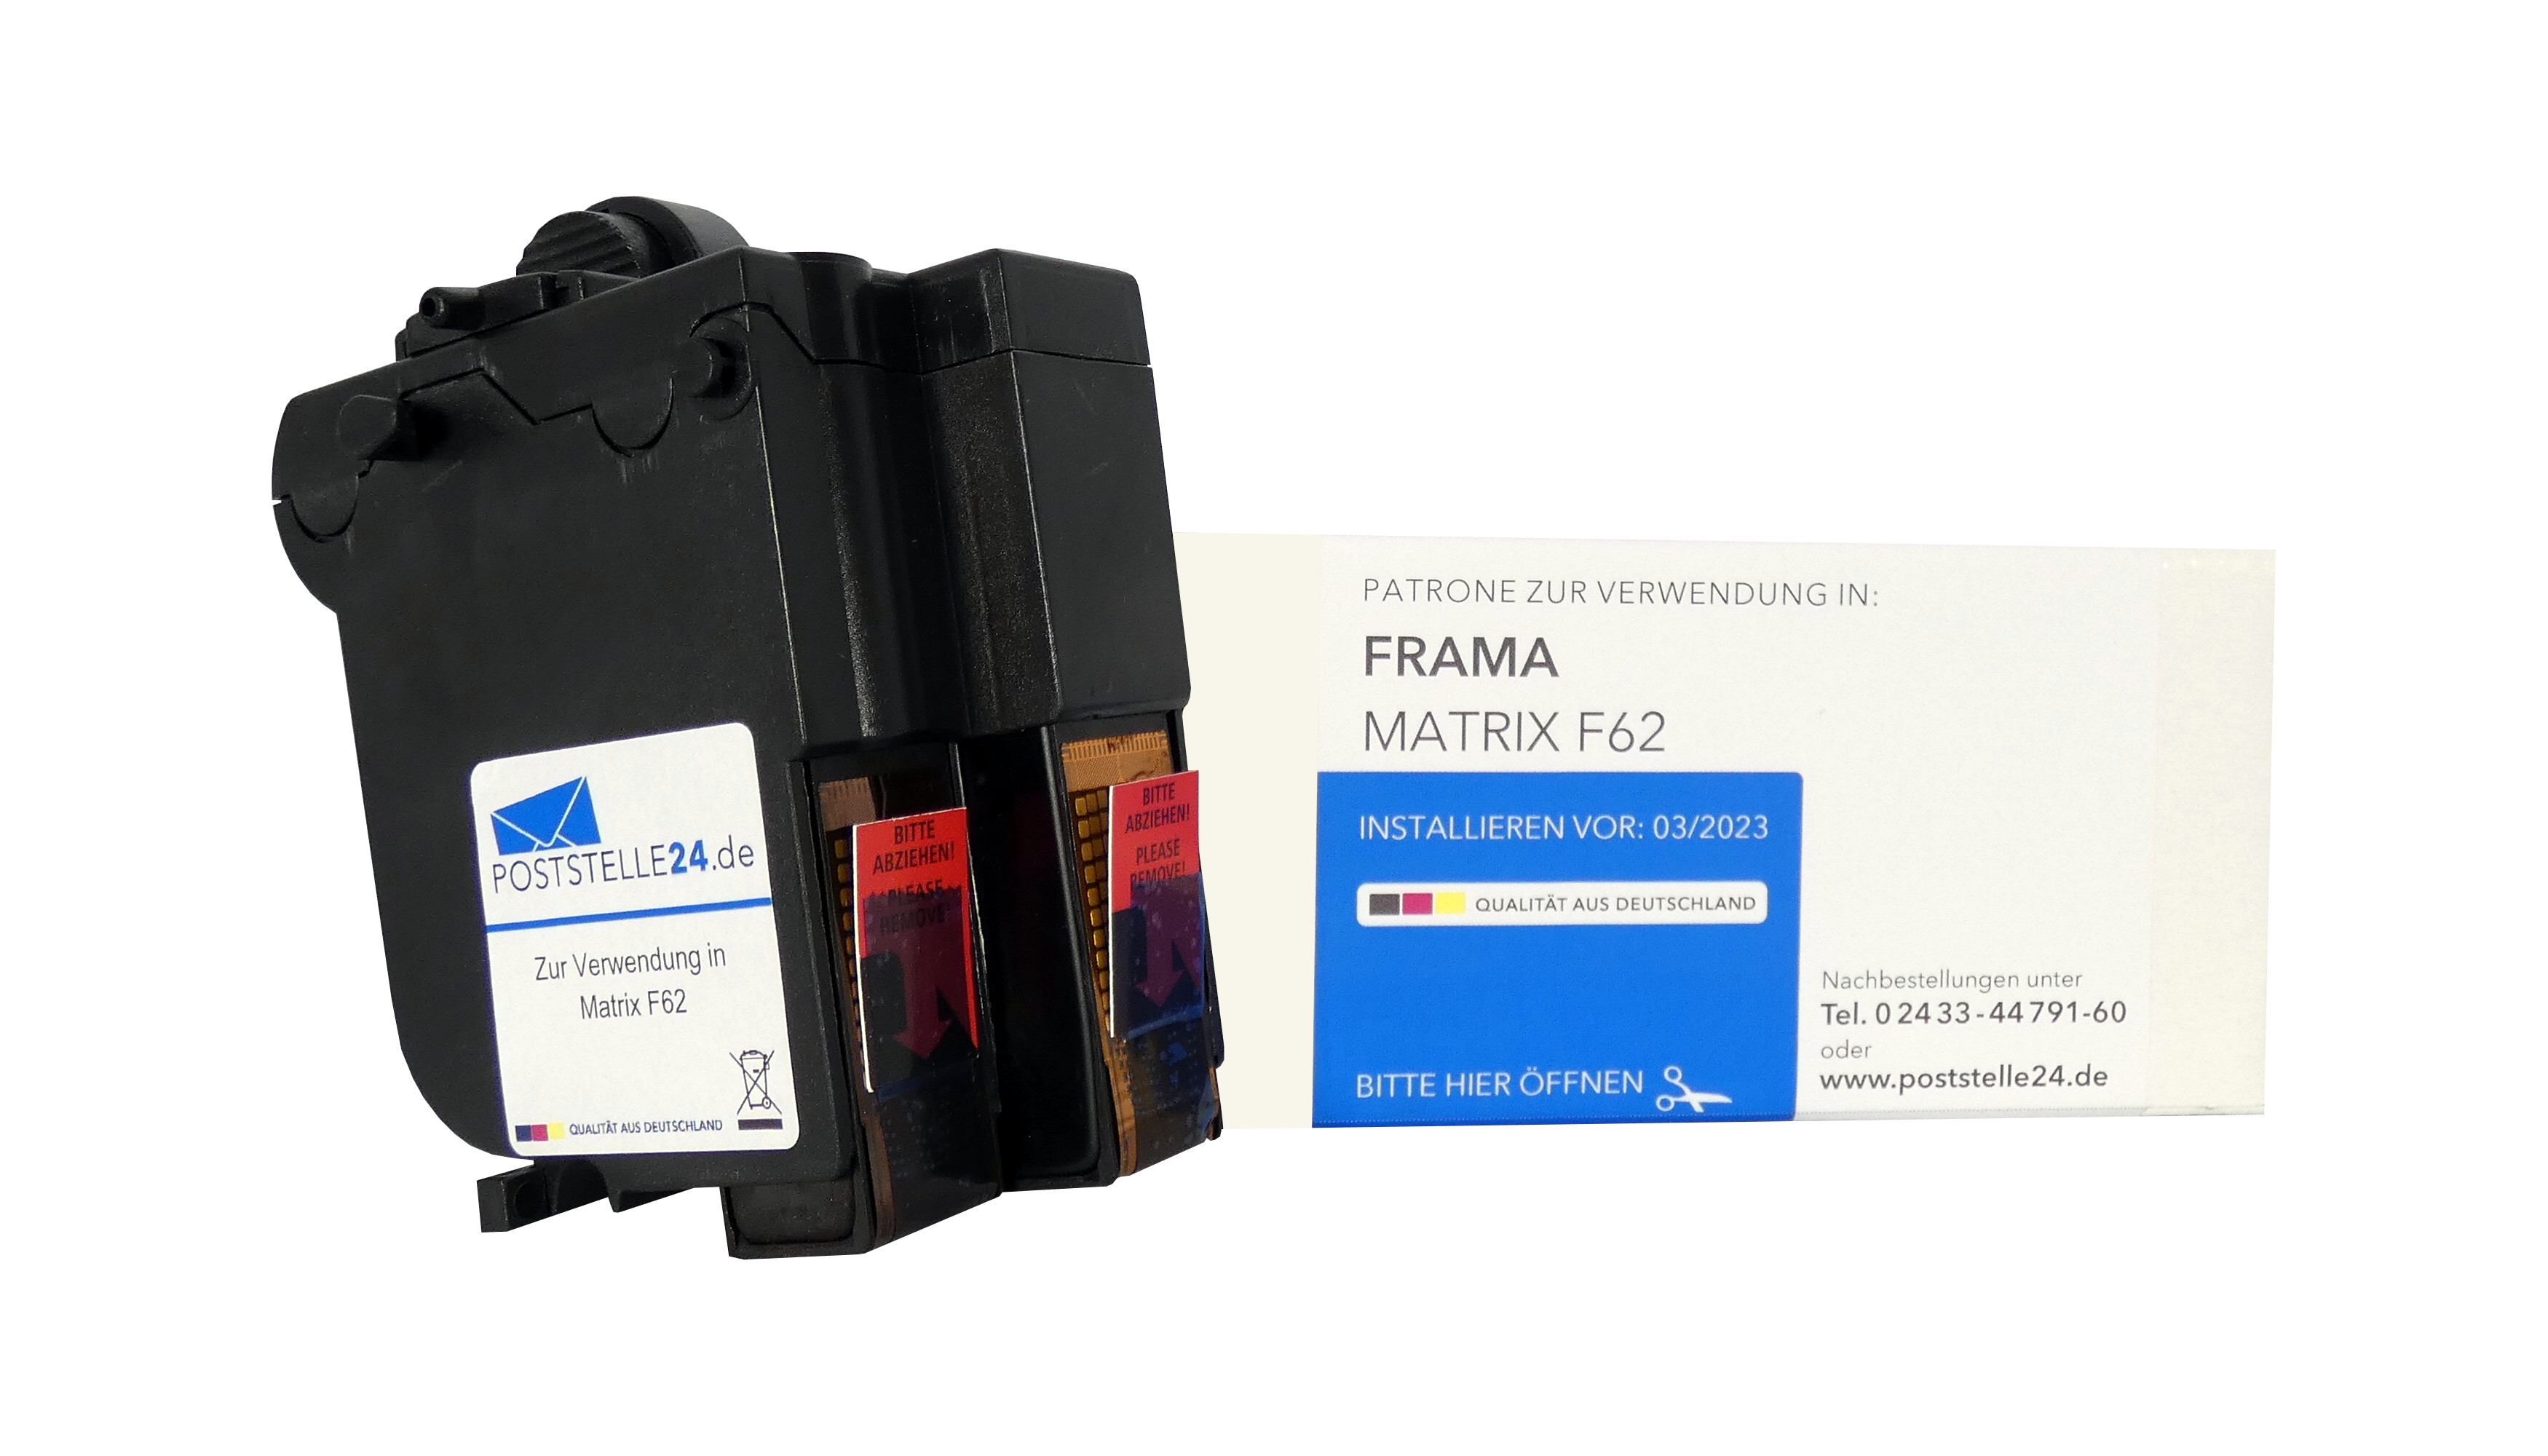 remanufactured cartridge for use in Frama Matrix F62